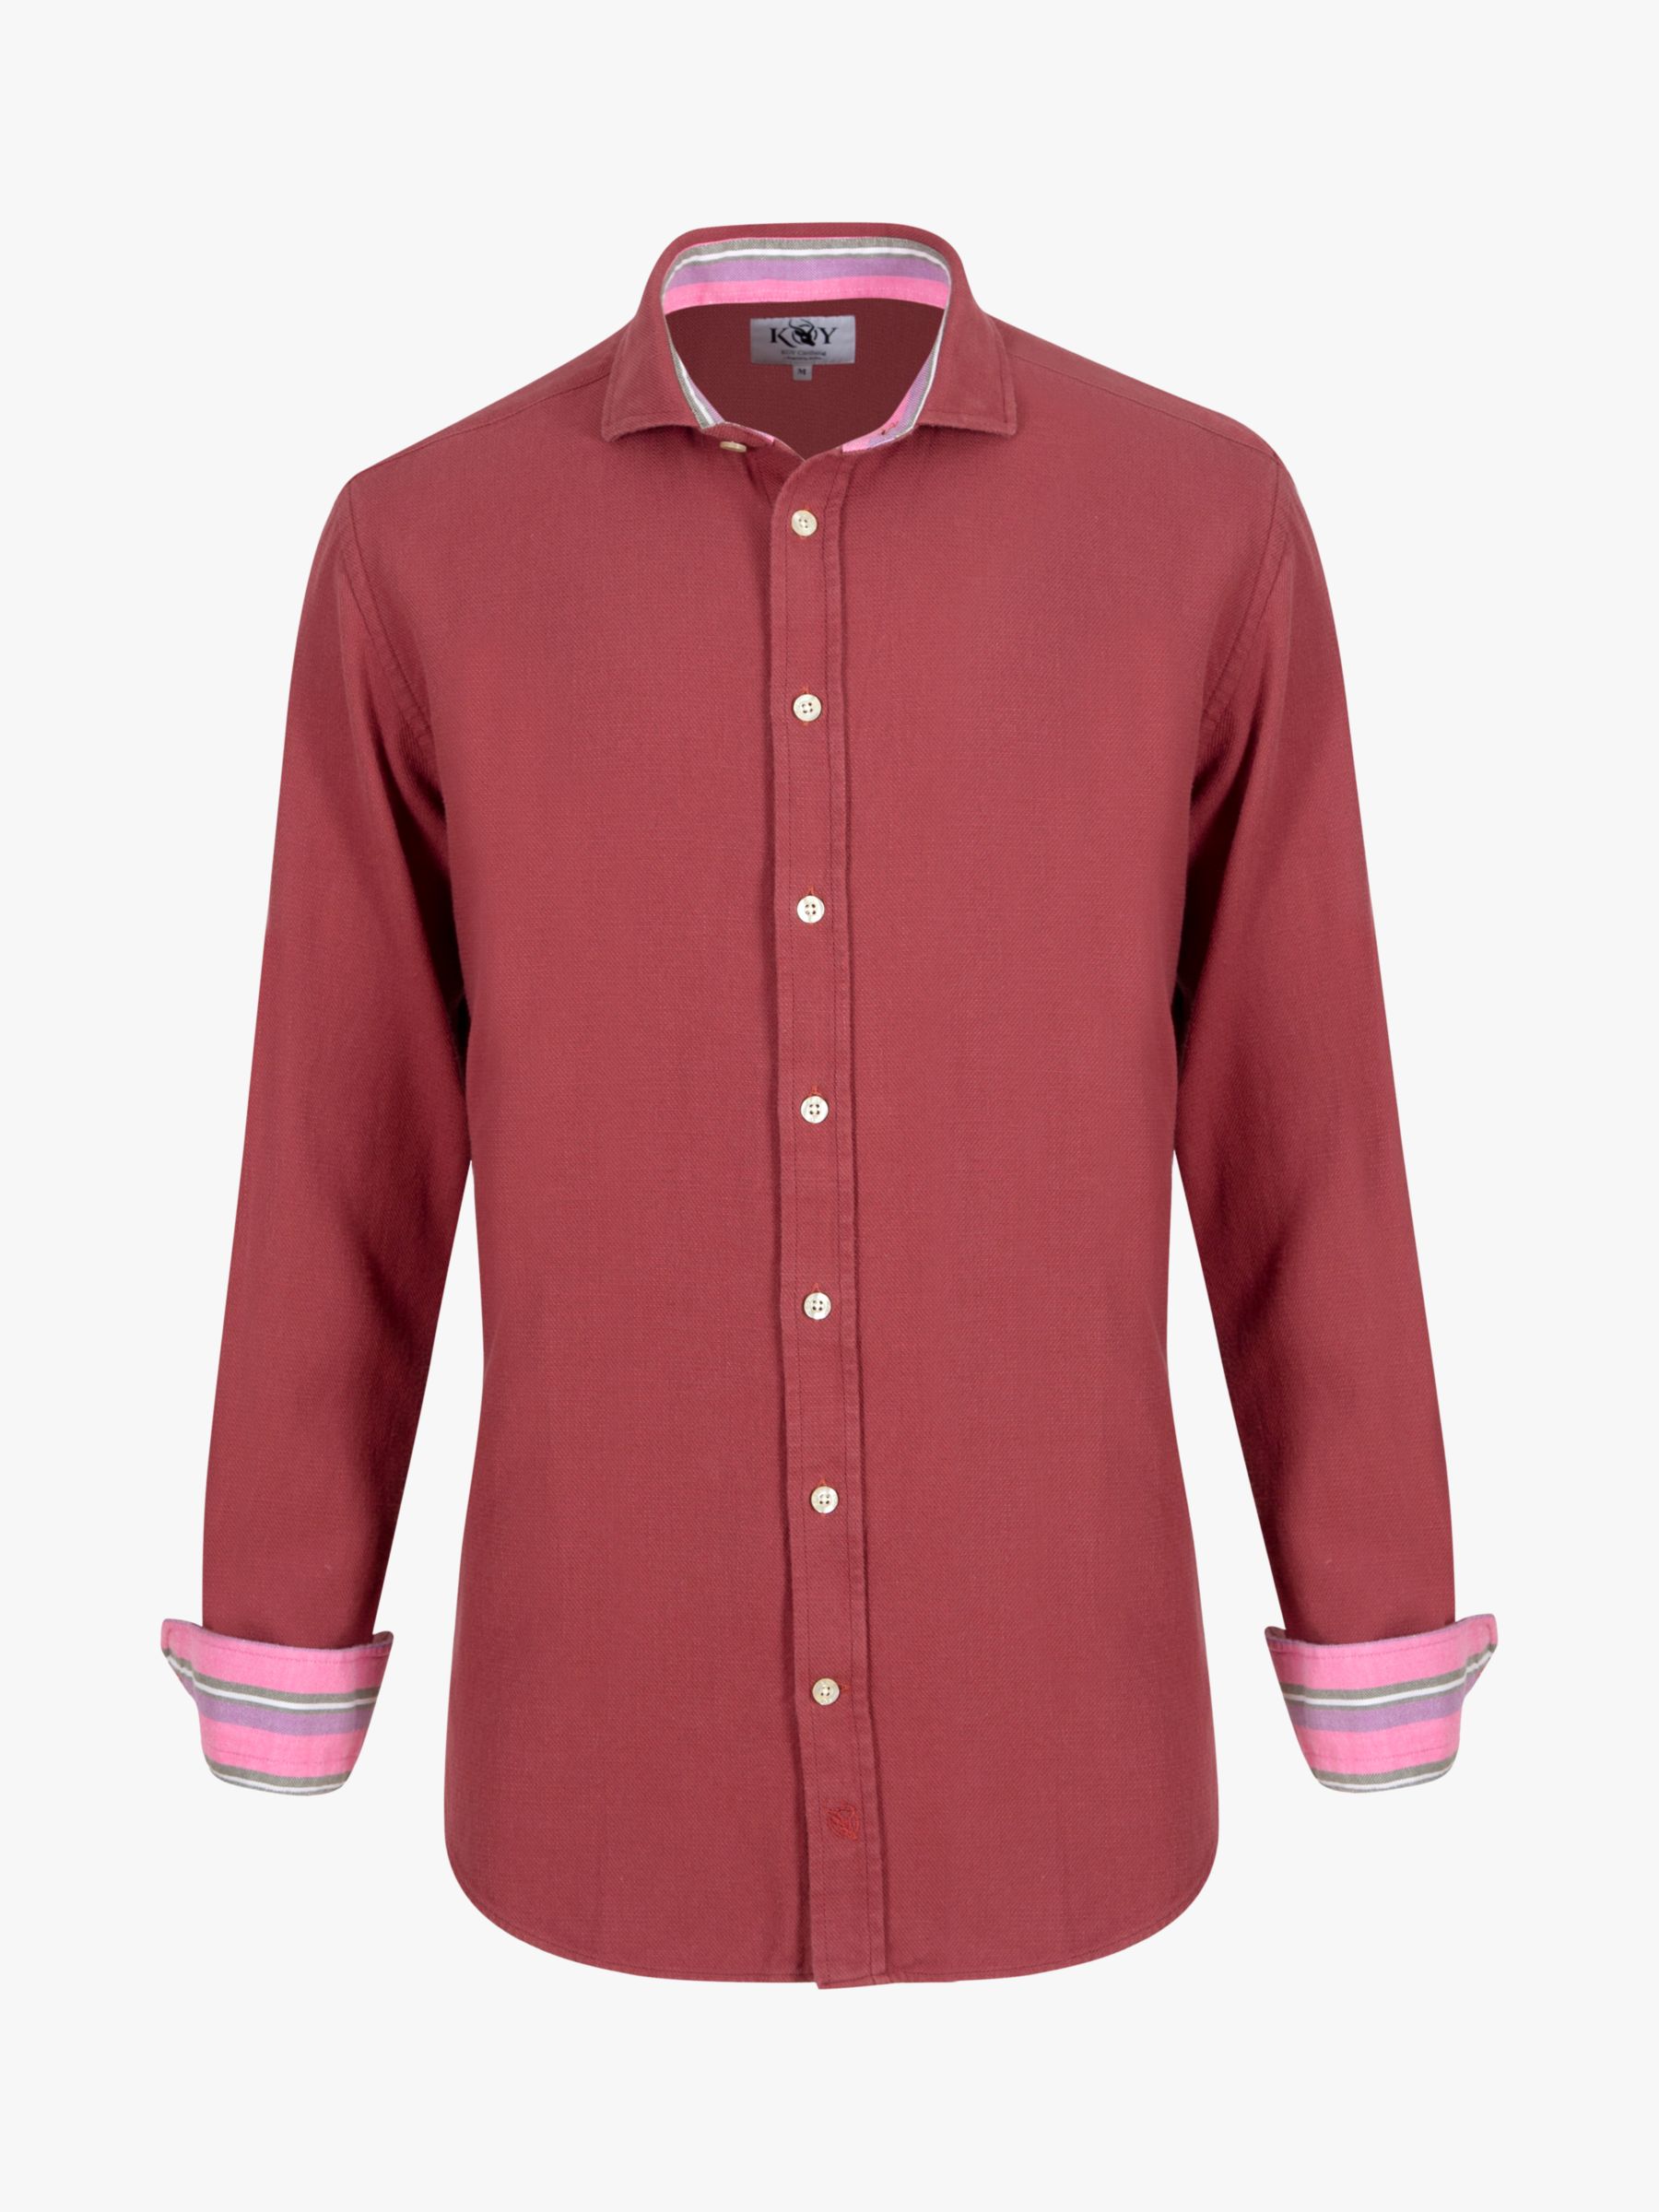 KOY Oxford Cotton Shirt, Orange Coral, S